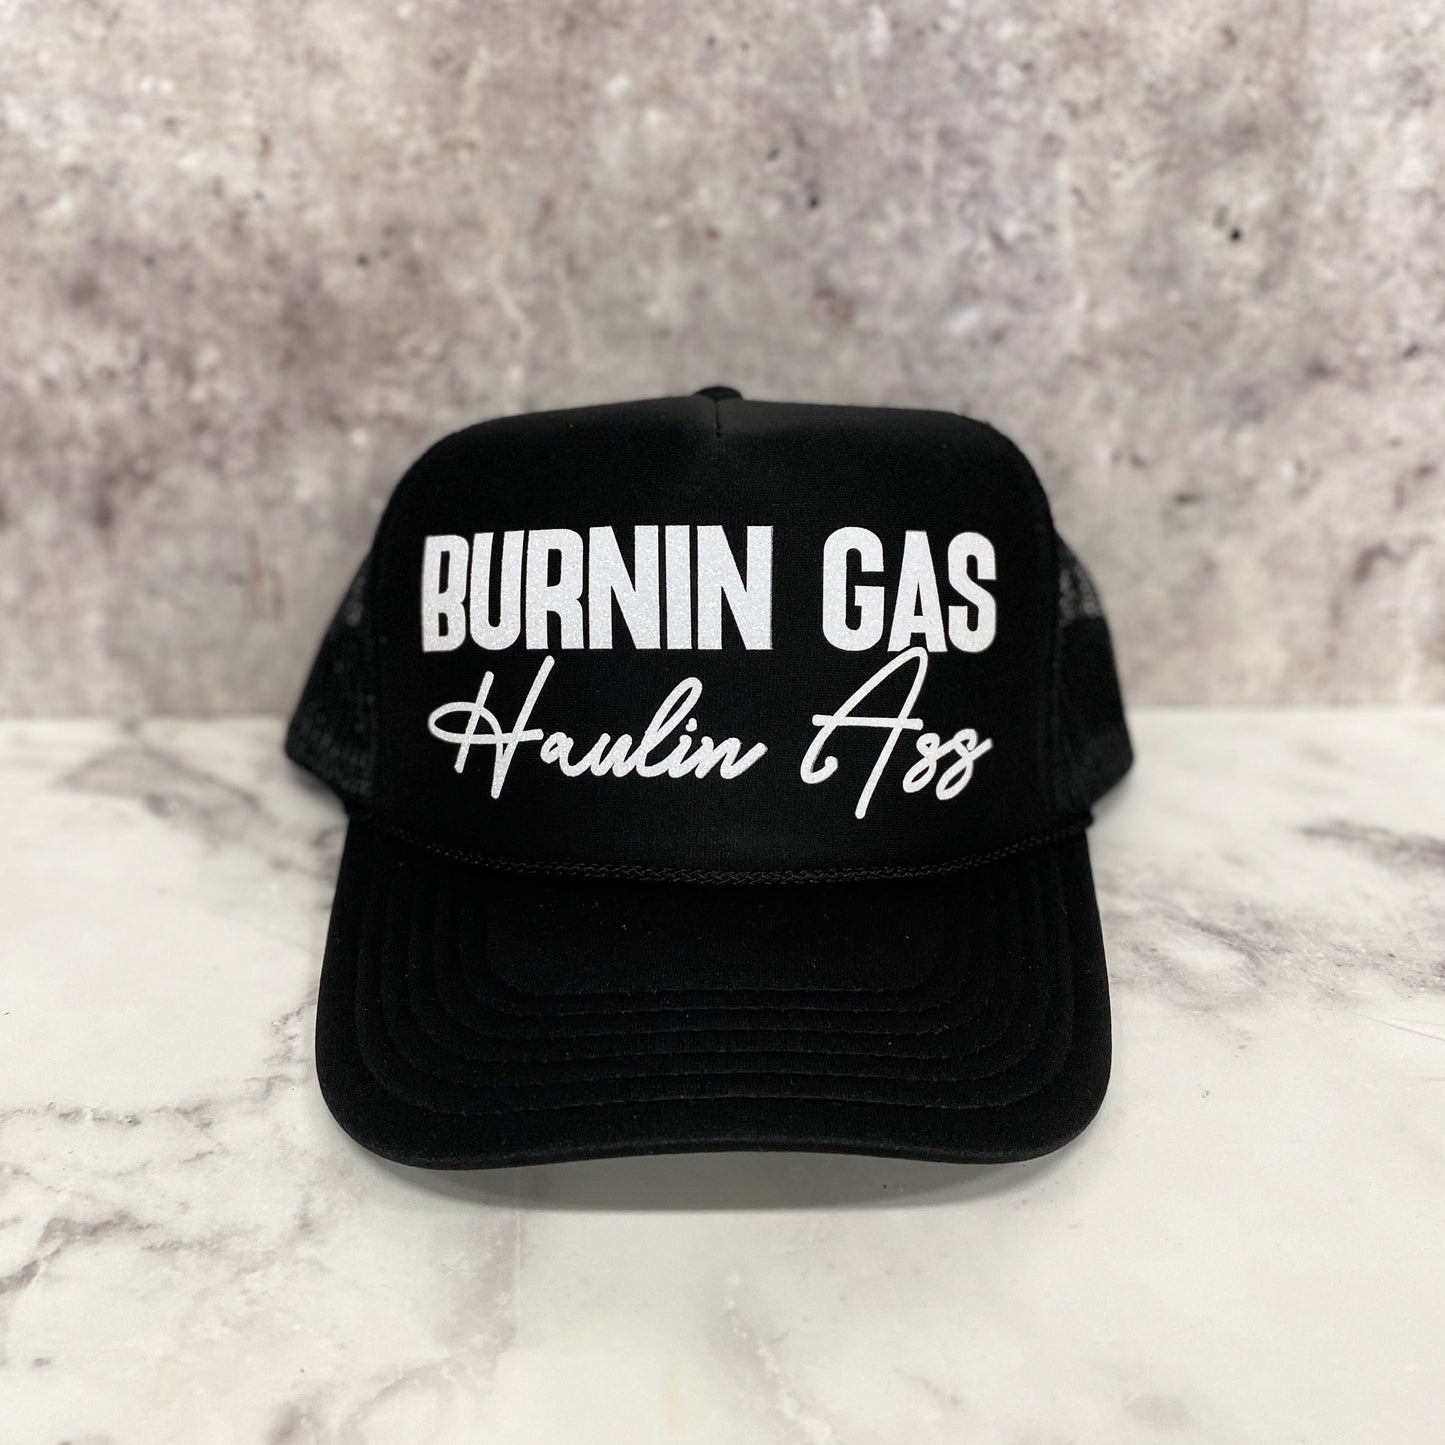 Burning Gas Haulin Ass